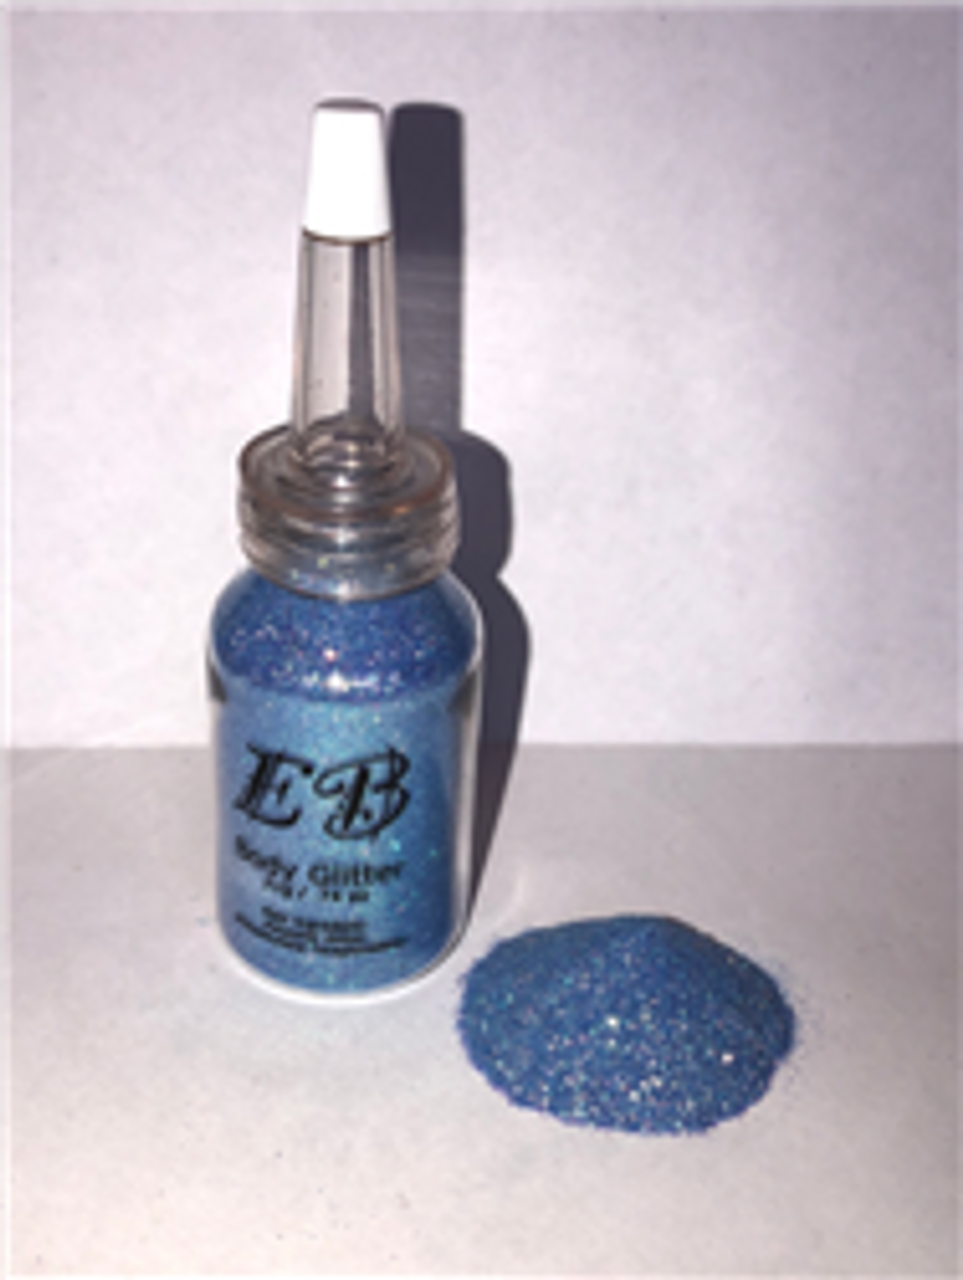 Iridescent Blue E.B. Glitter